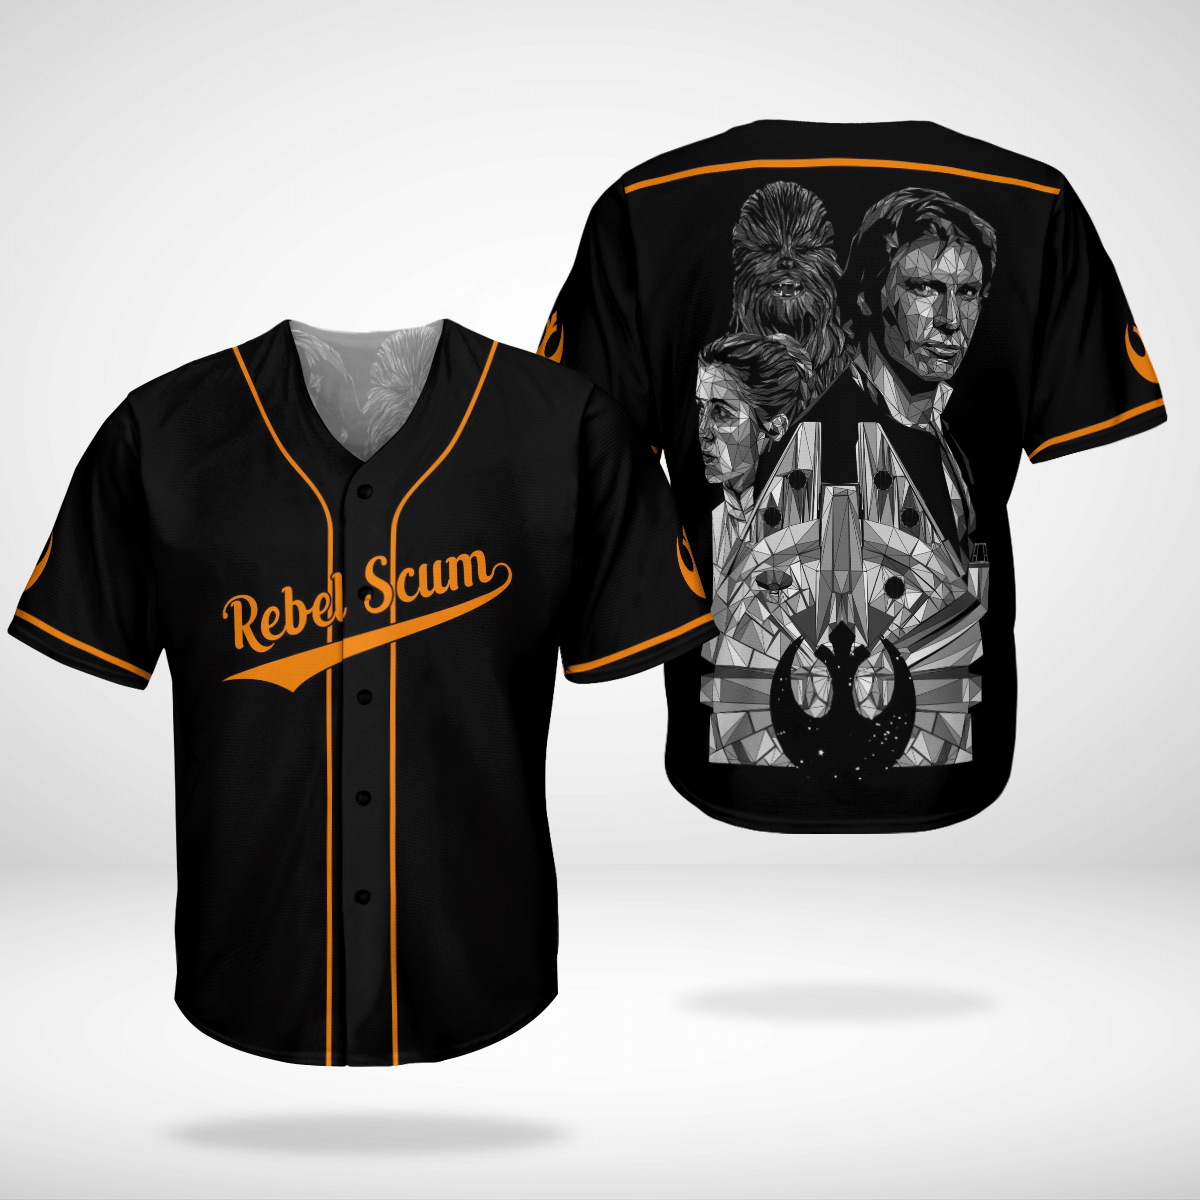 Rebel Scrum baseball shirt